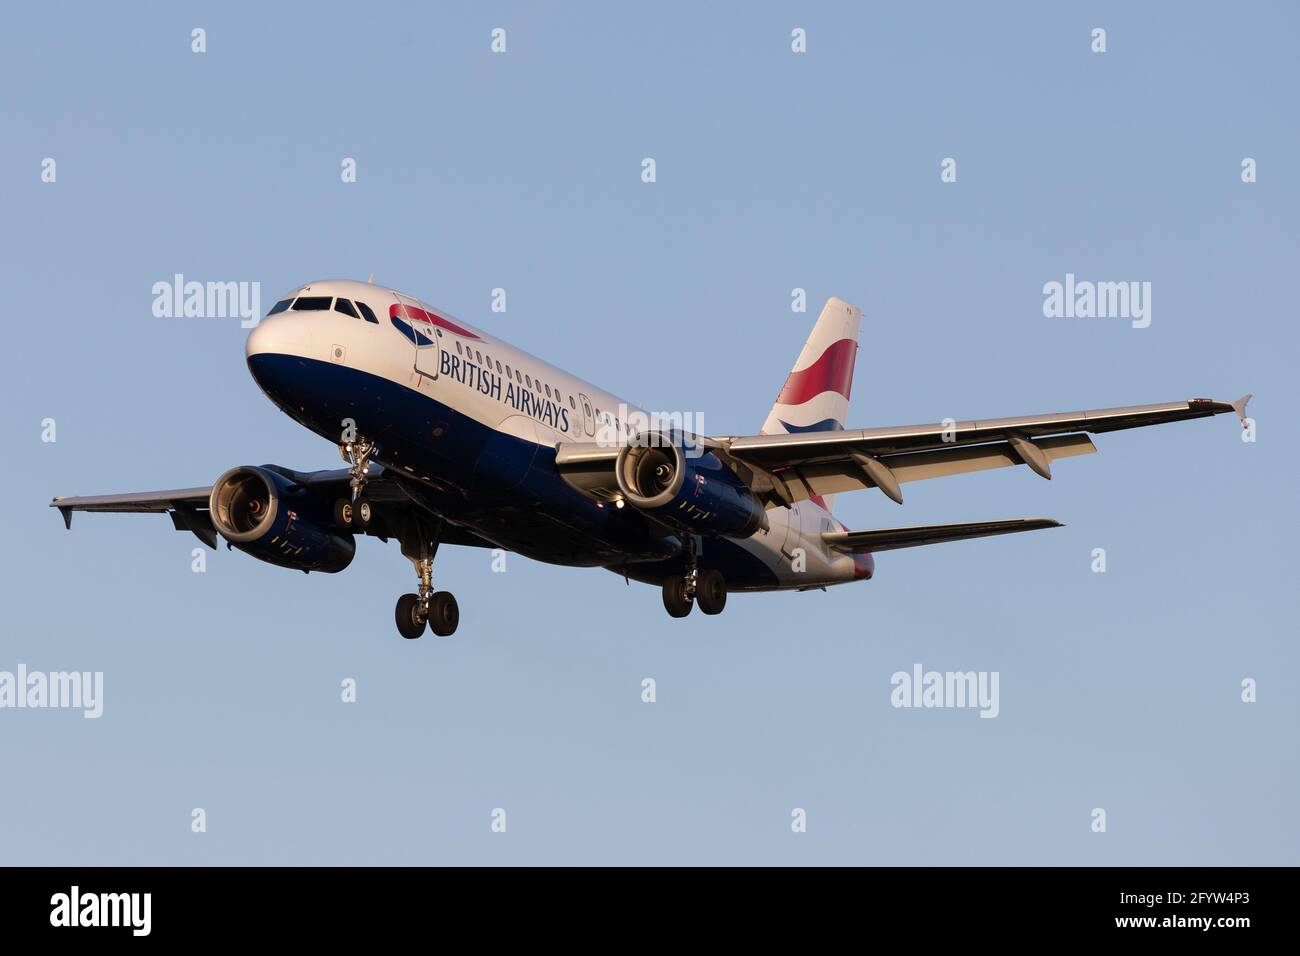 LONDON, UNITED KINGDOM - Feb 23, 2020: British Airways (BA / BAW) approaching London Heathrow Airport (EGLL/LHR) with an Airbus A319-131 (G-EUPA/1082) Stock Photo